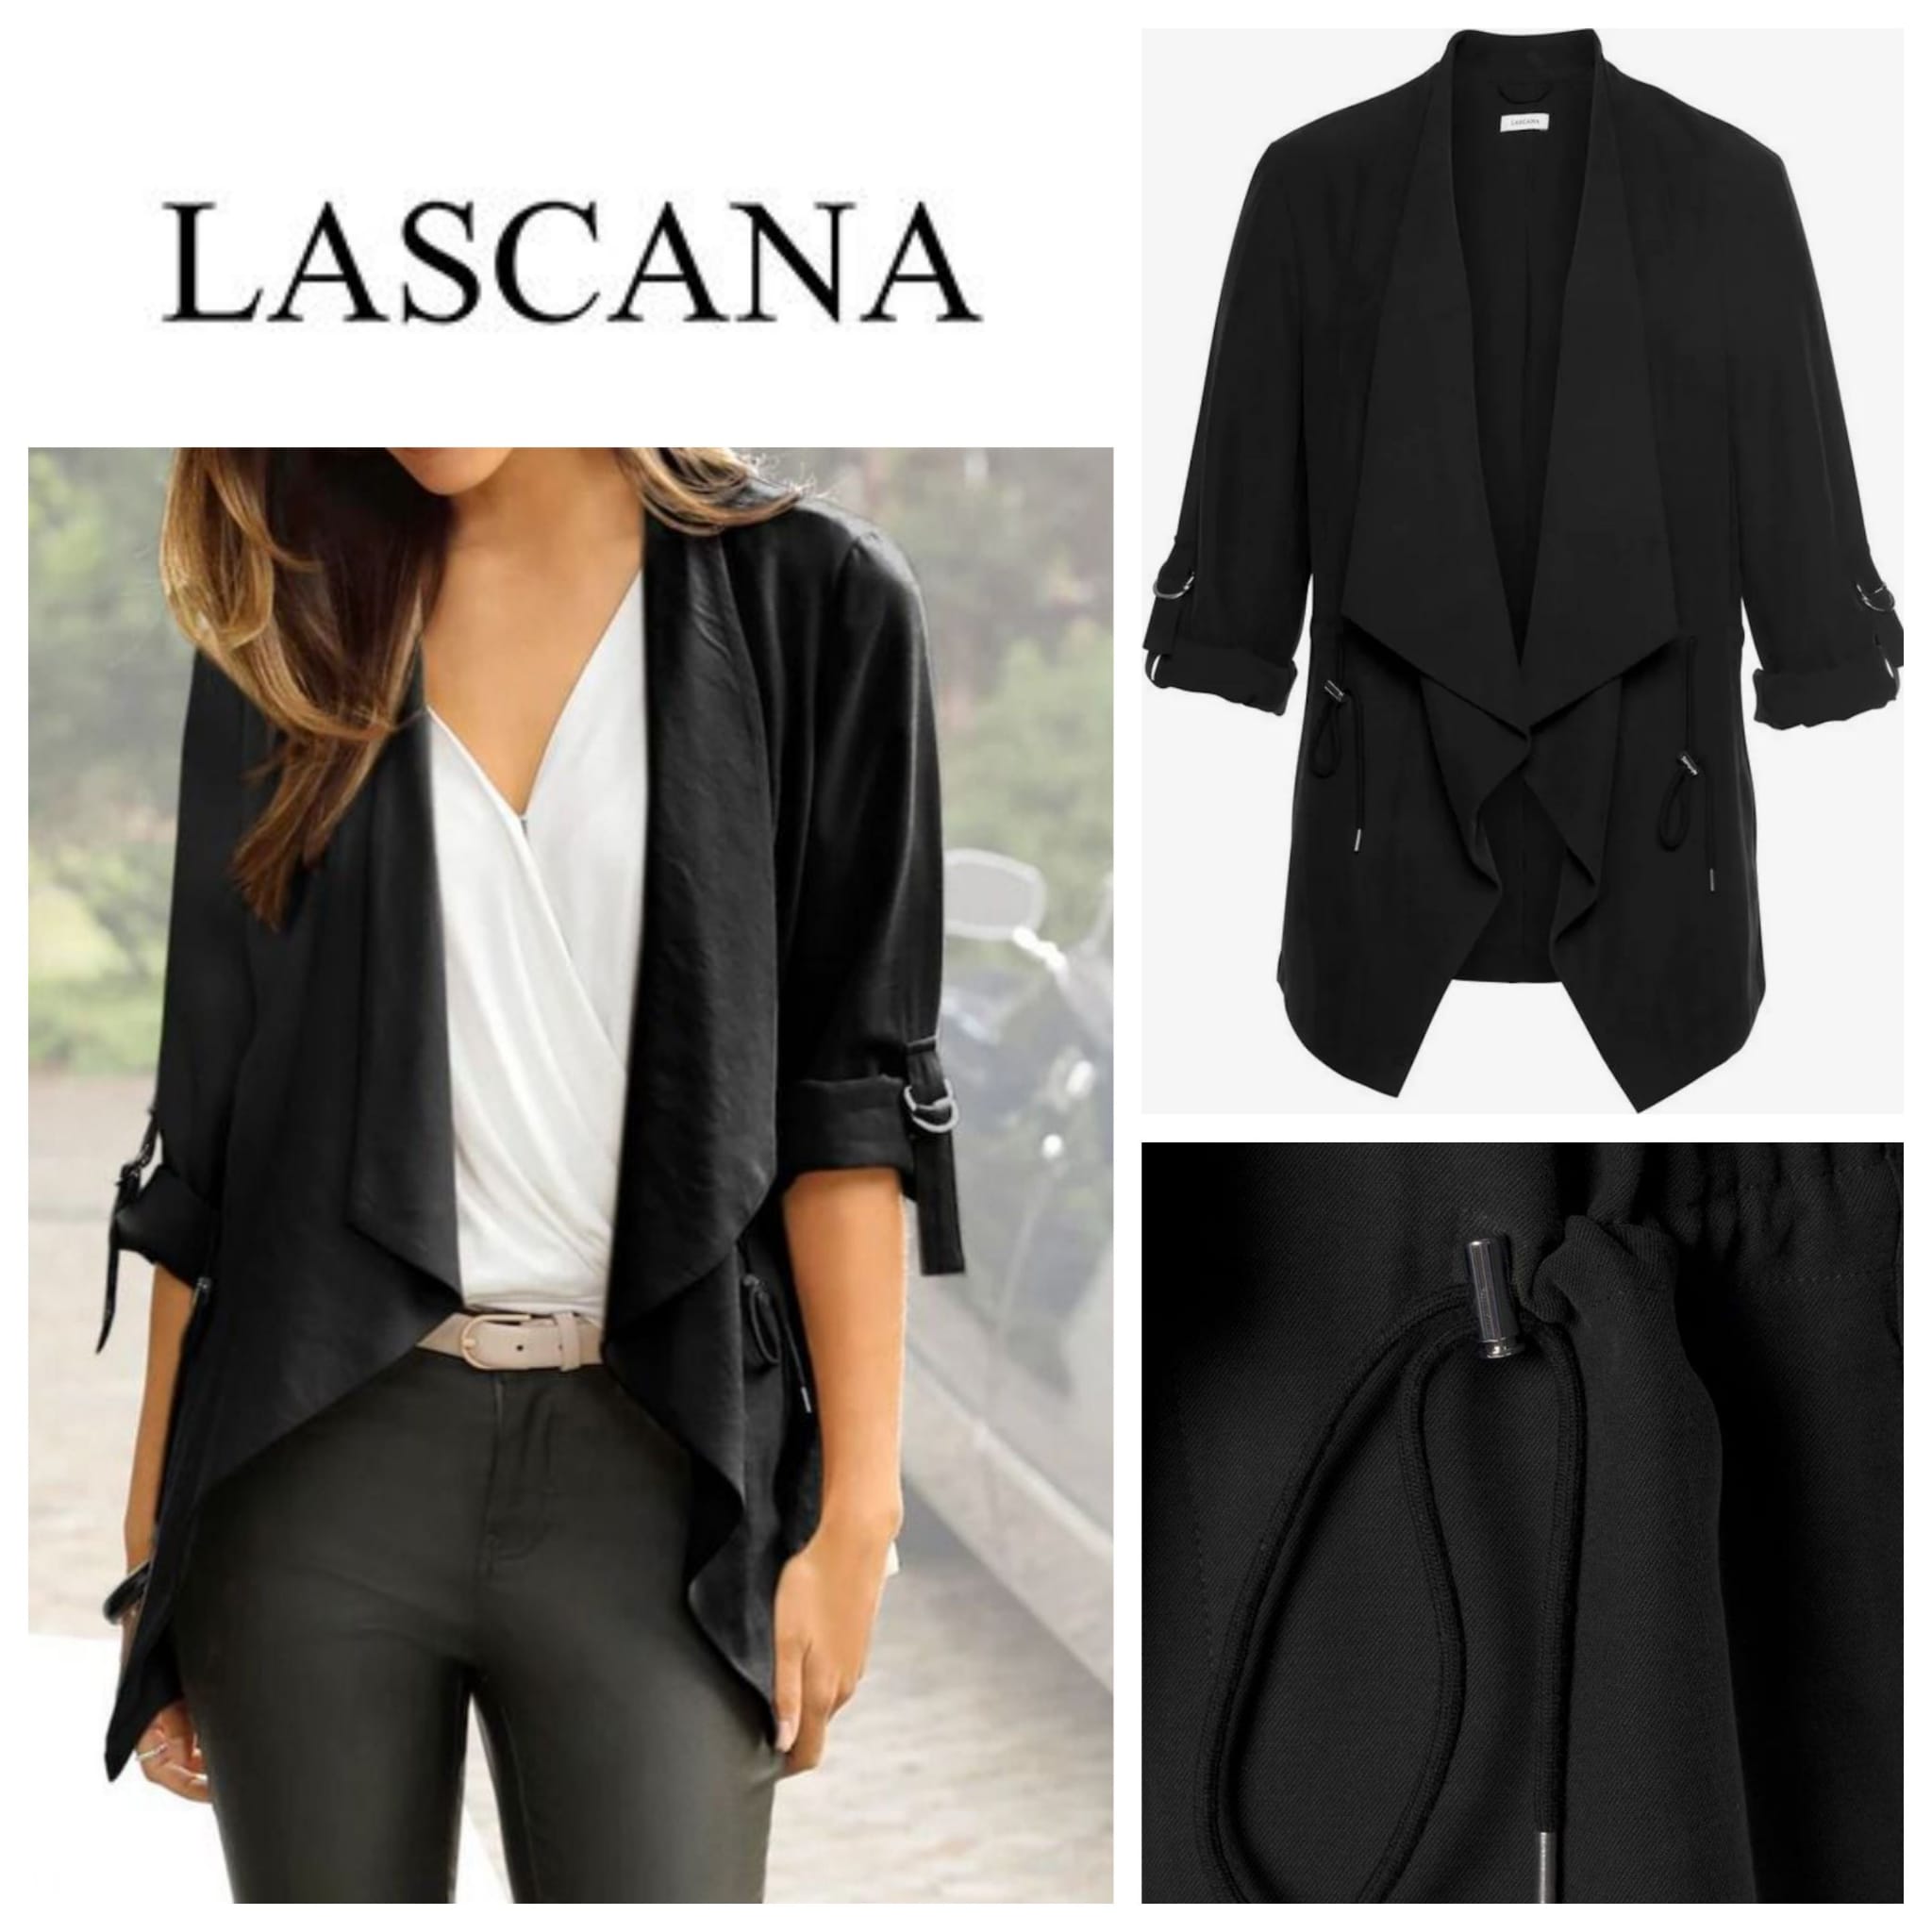 Lascana Women's black blazer